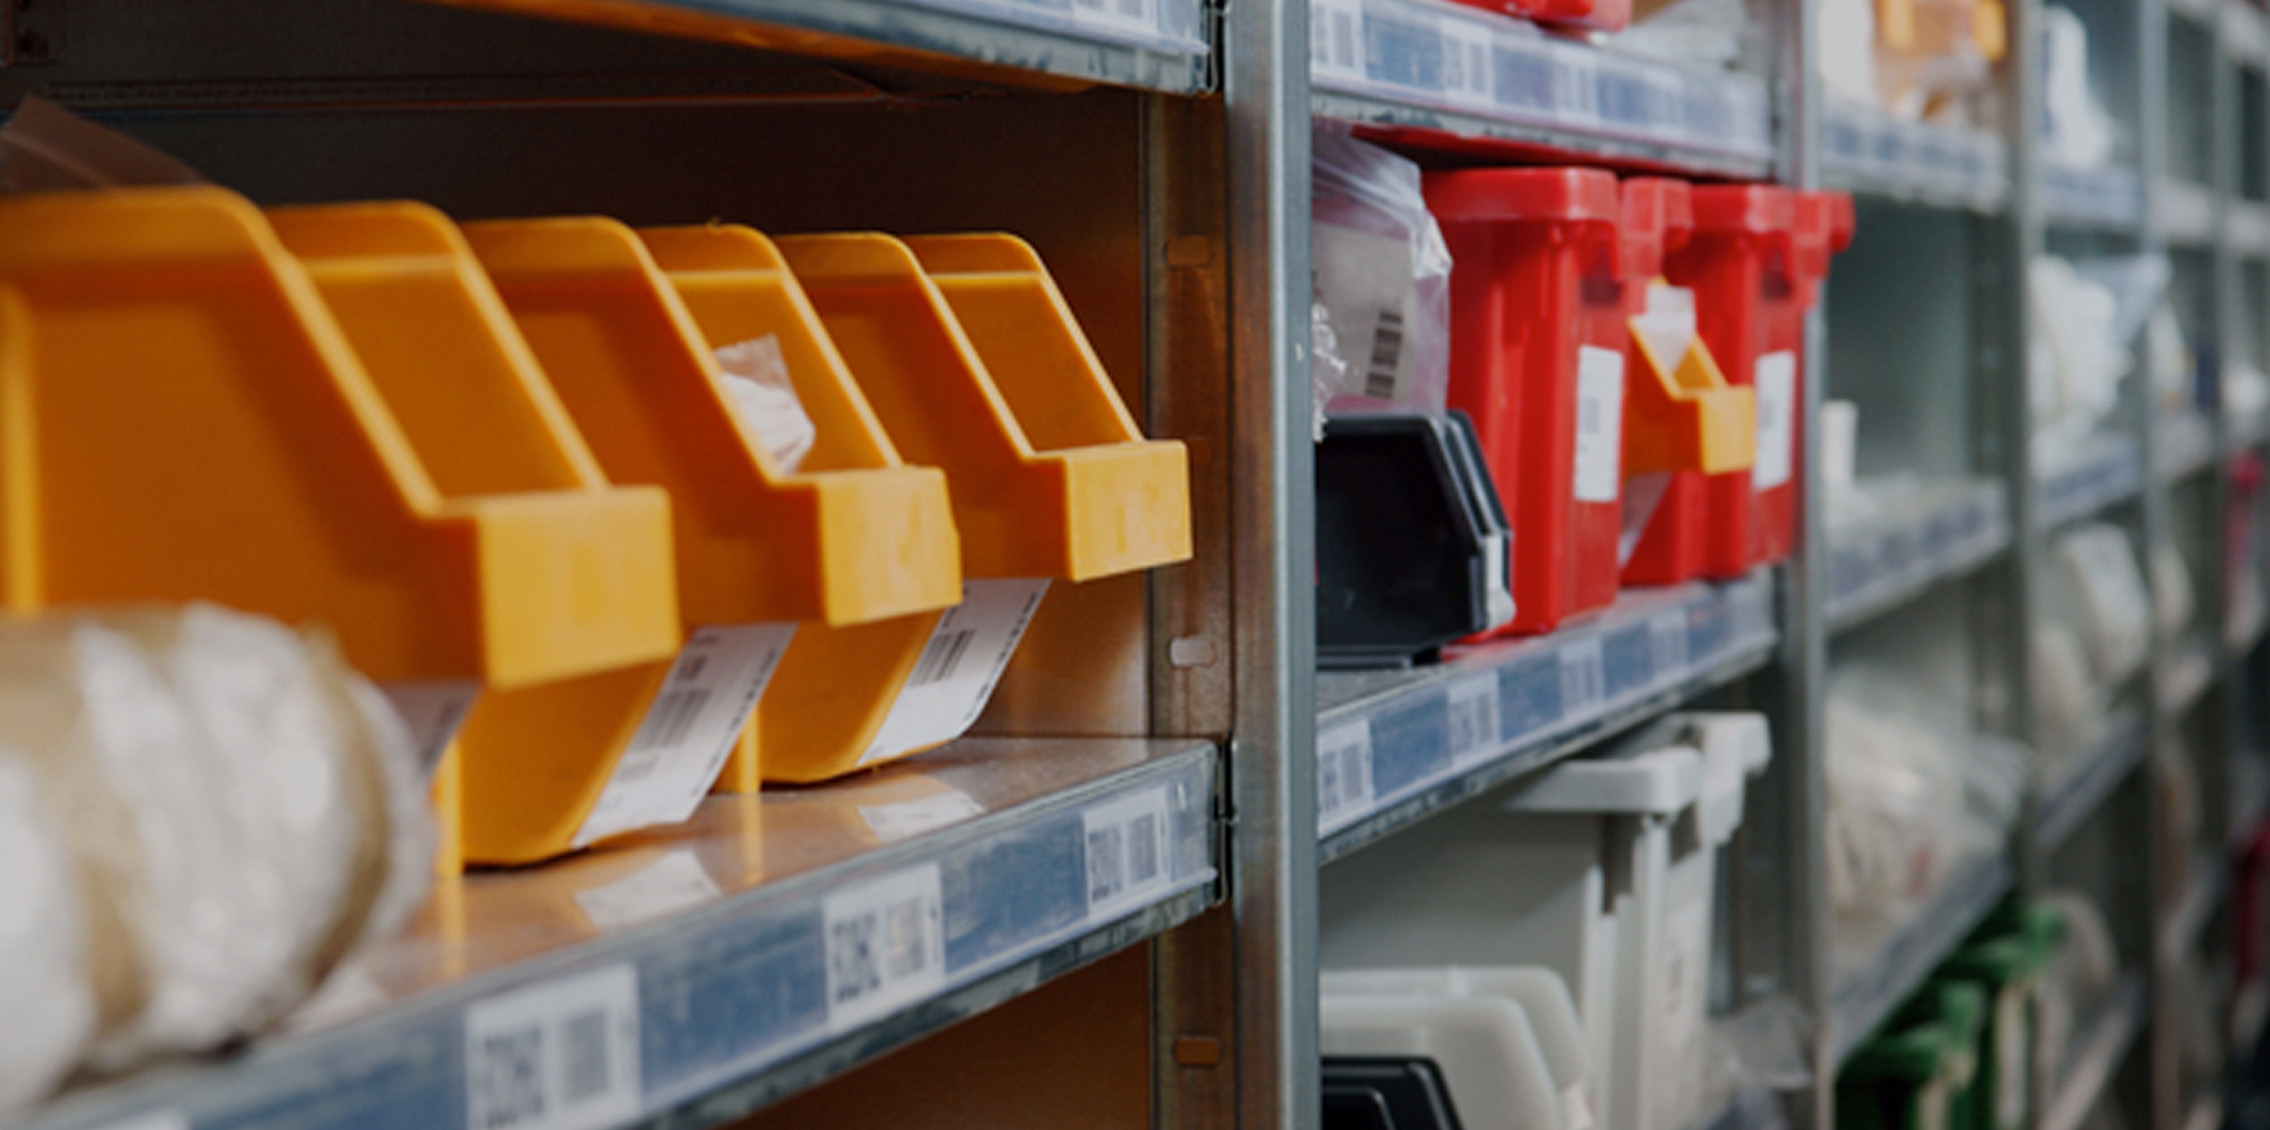 Inventory Management Secrets inside your Warehouse